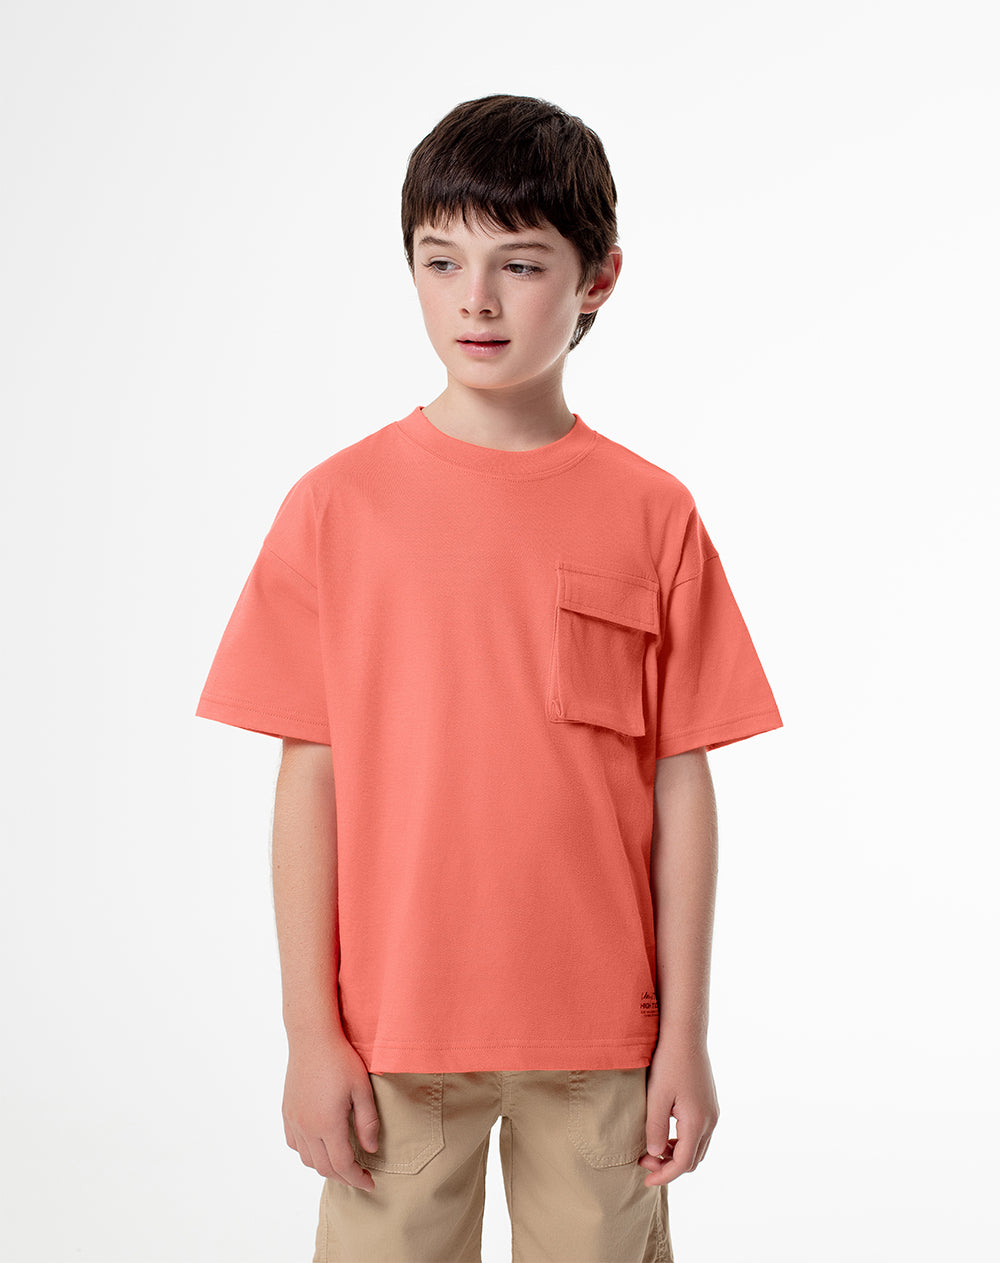 Camiseta regular fit manga corta coral